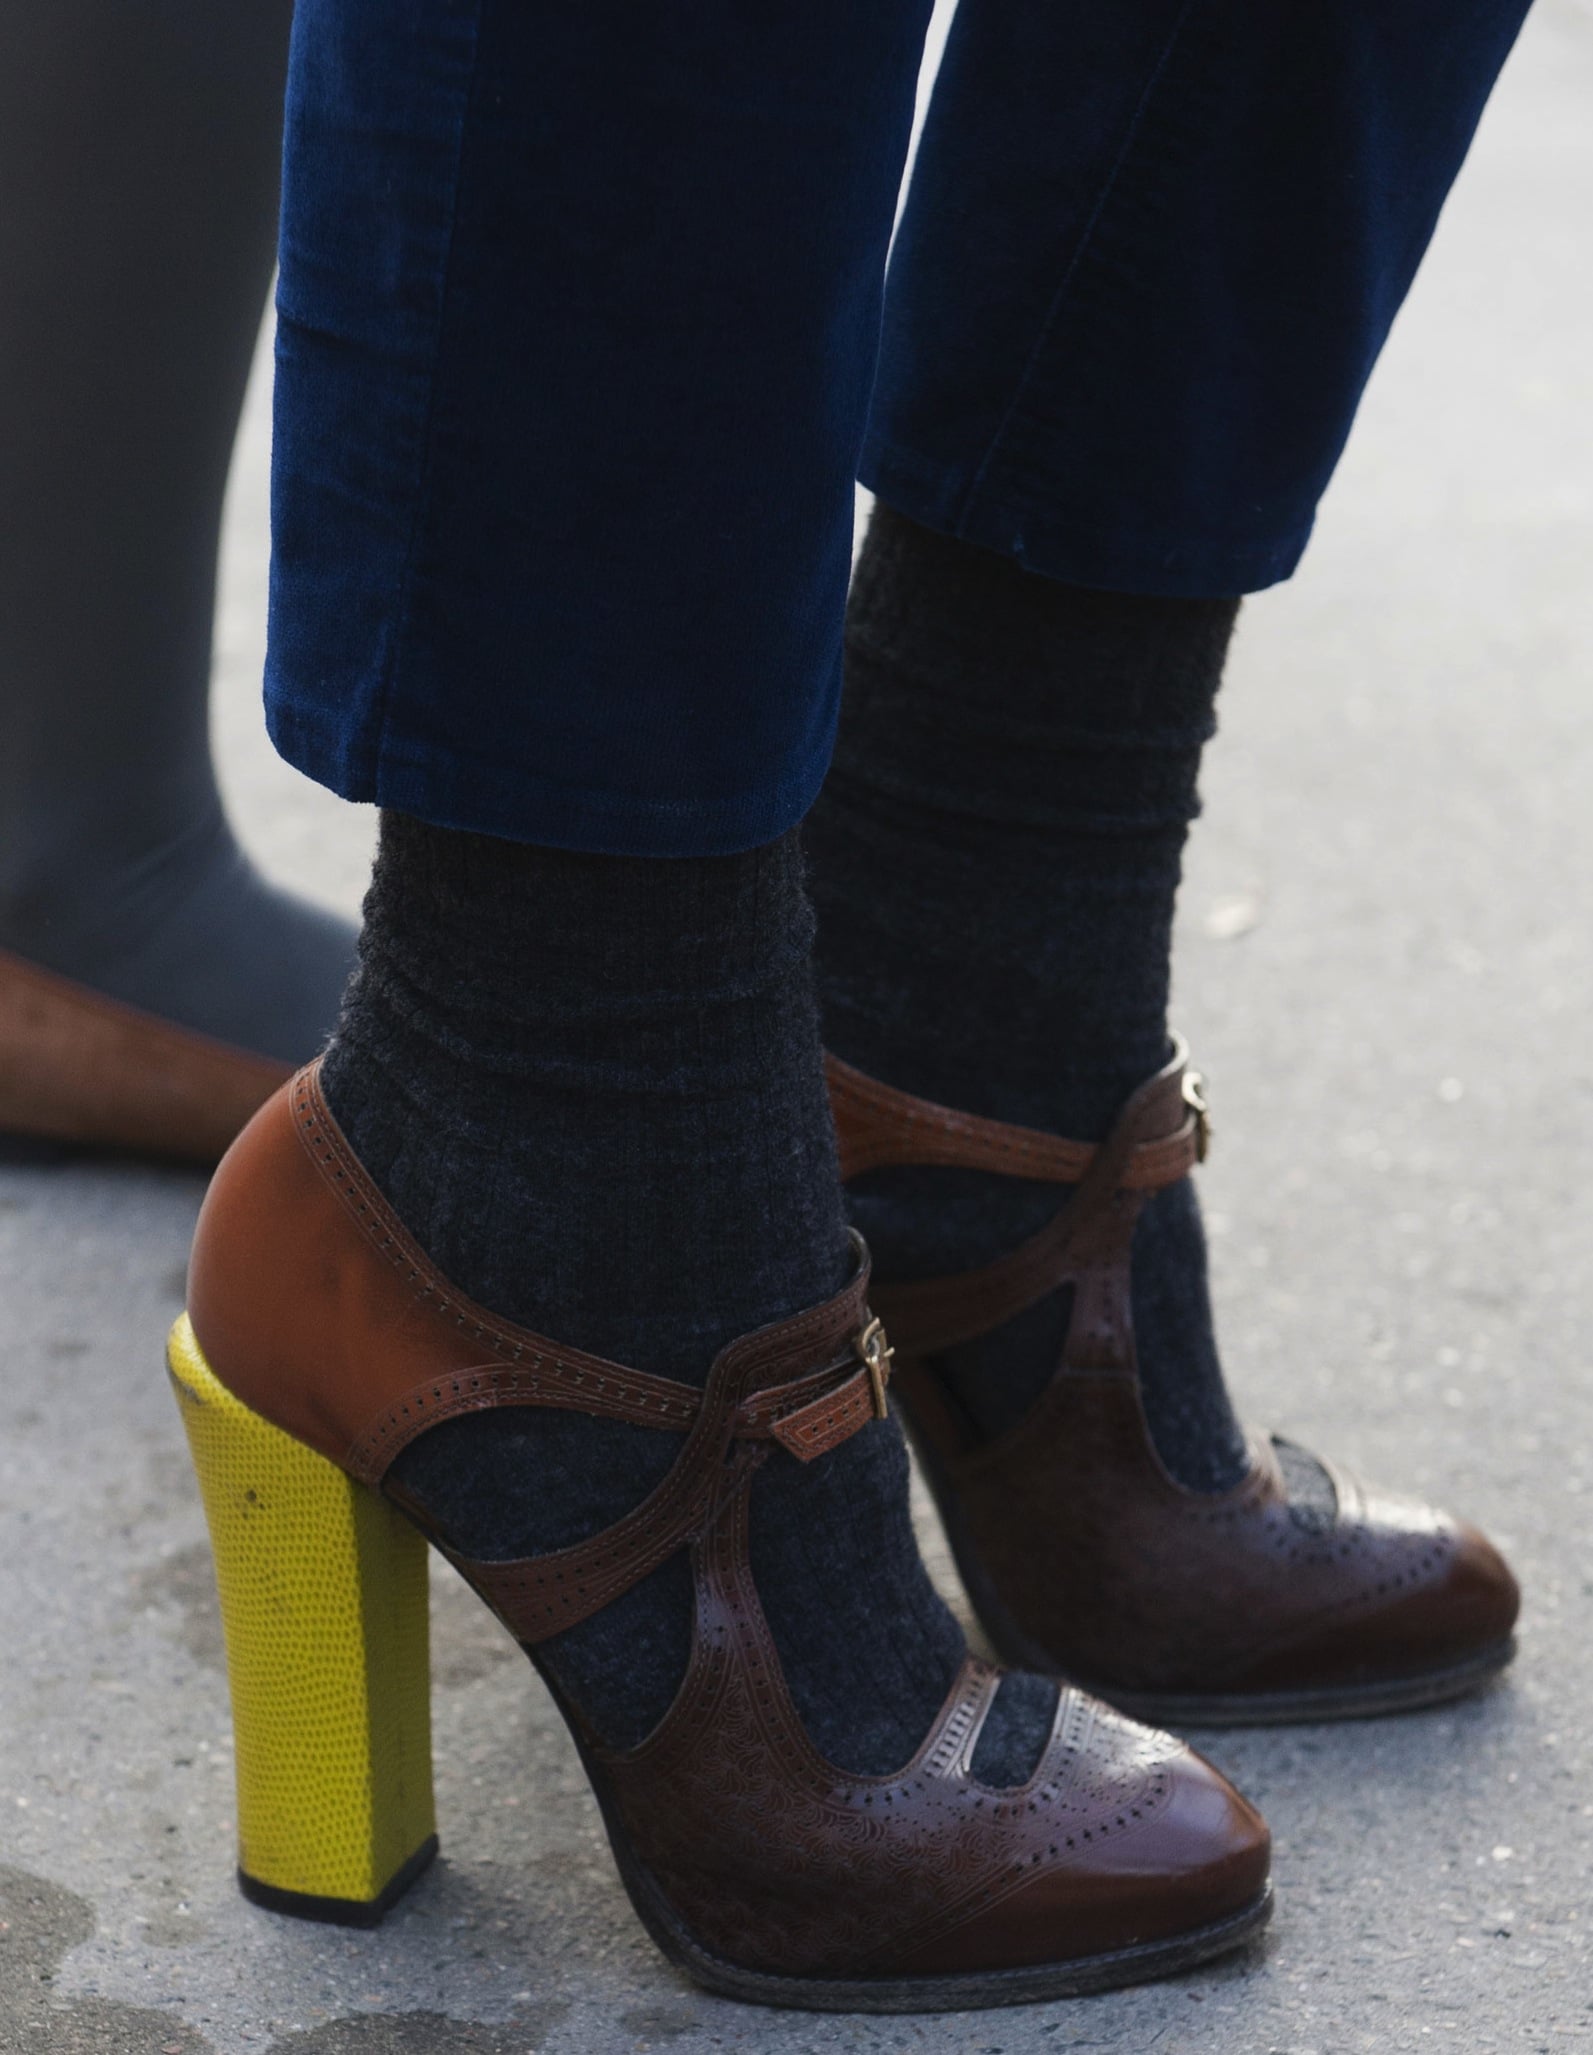 The bright yellow heels on Fendi's 